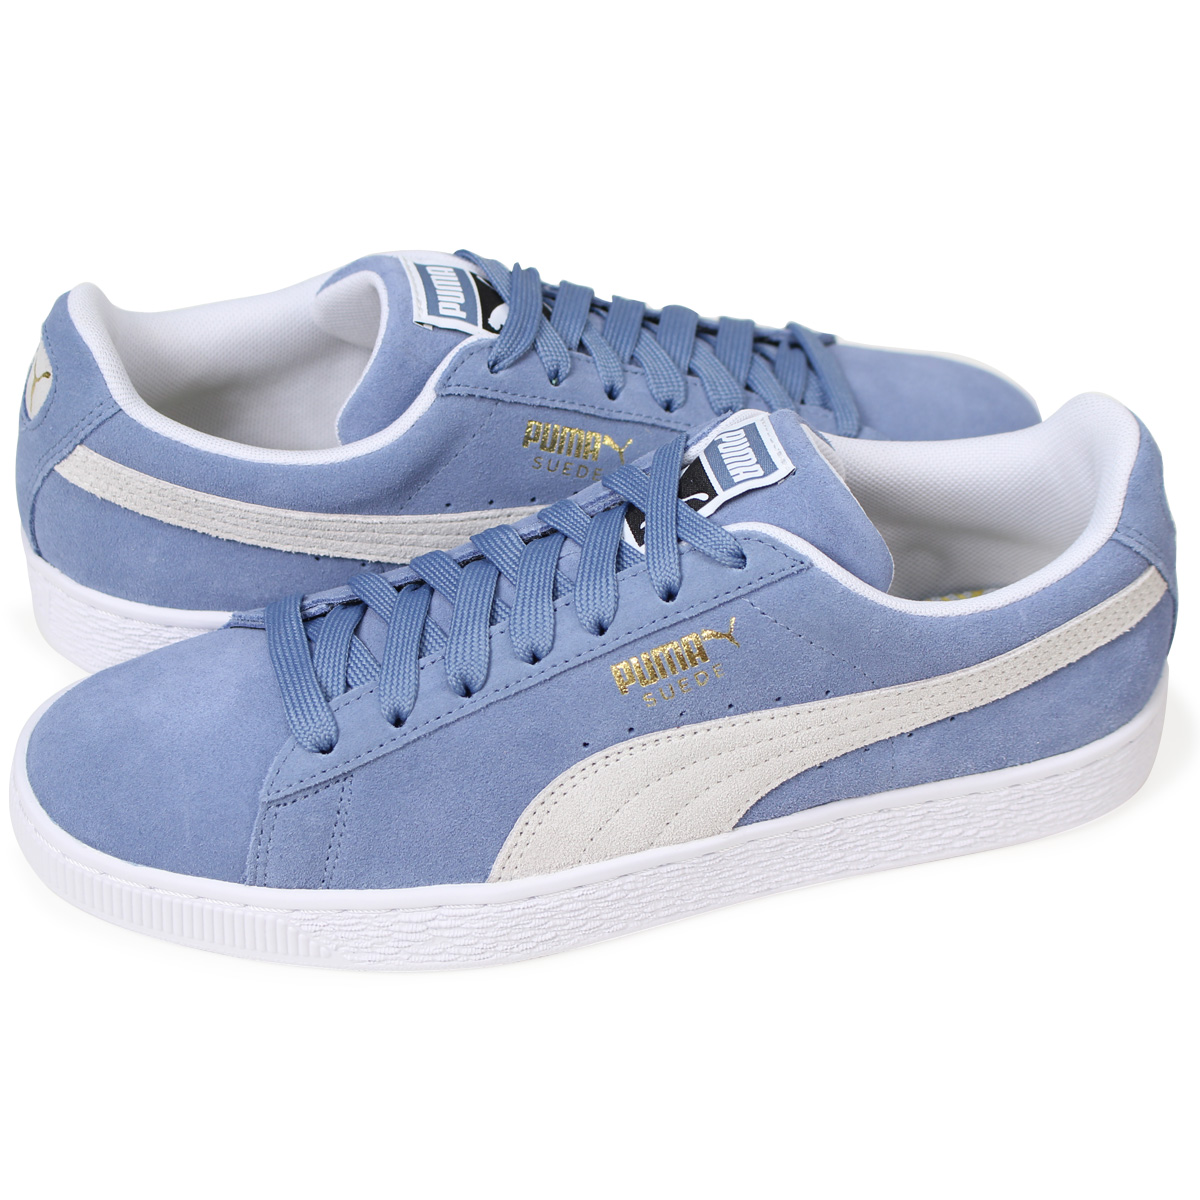 grey and blue puma shoes